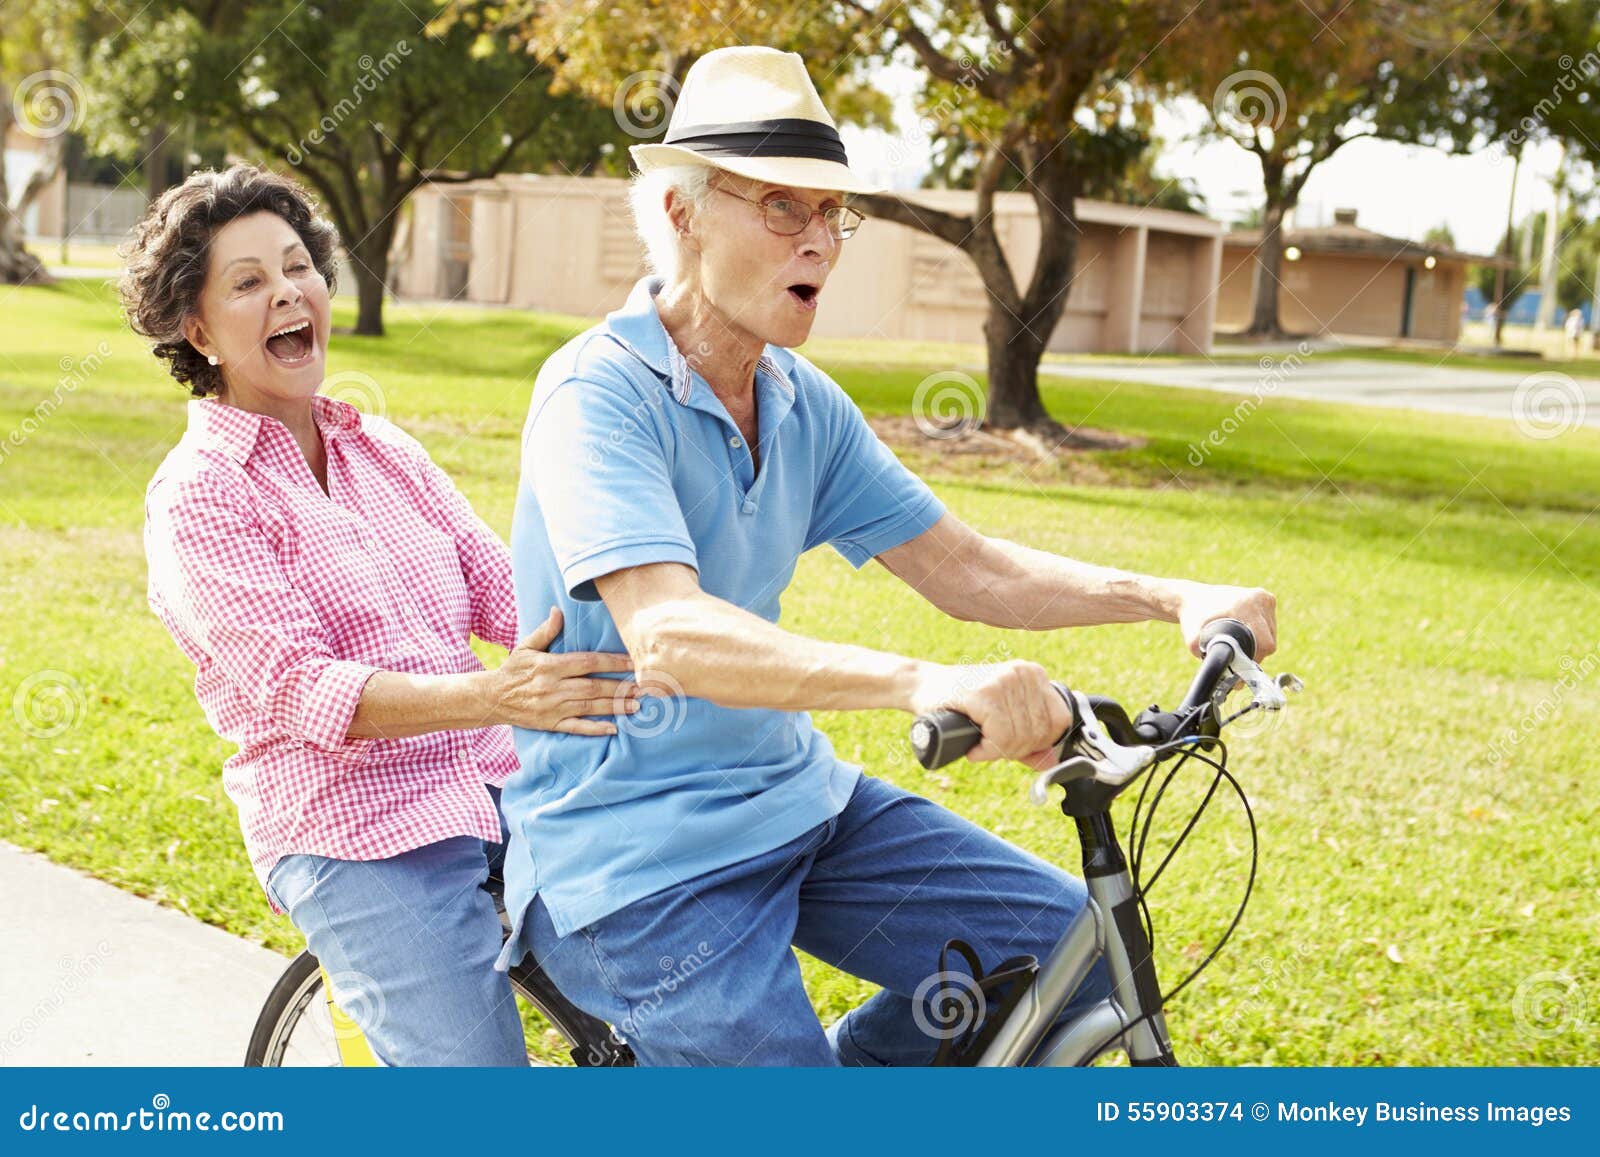 senior hispanic couple riding bikes in park